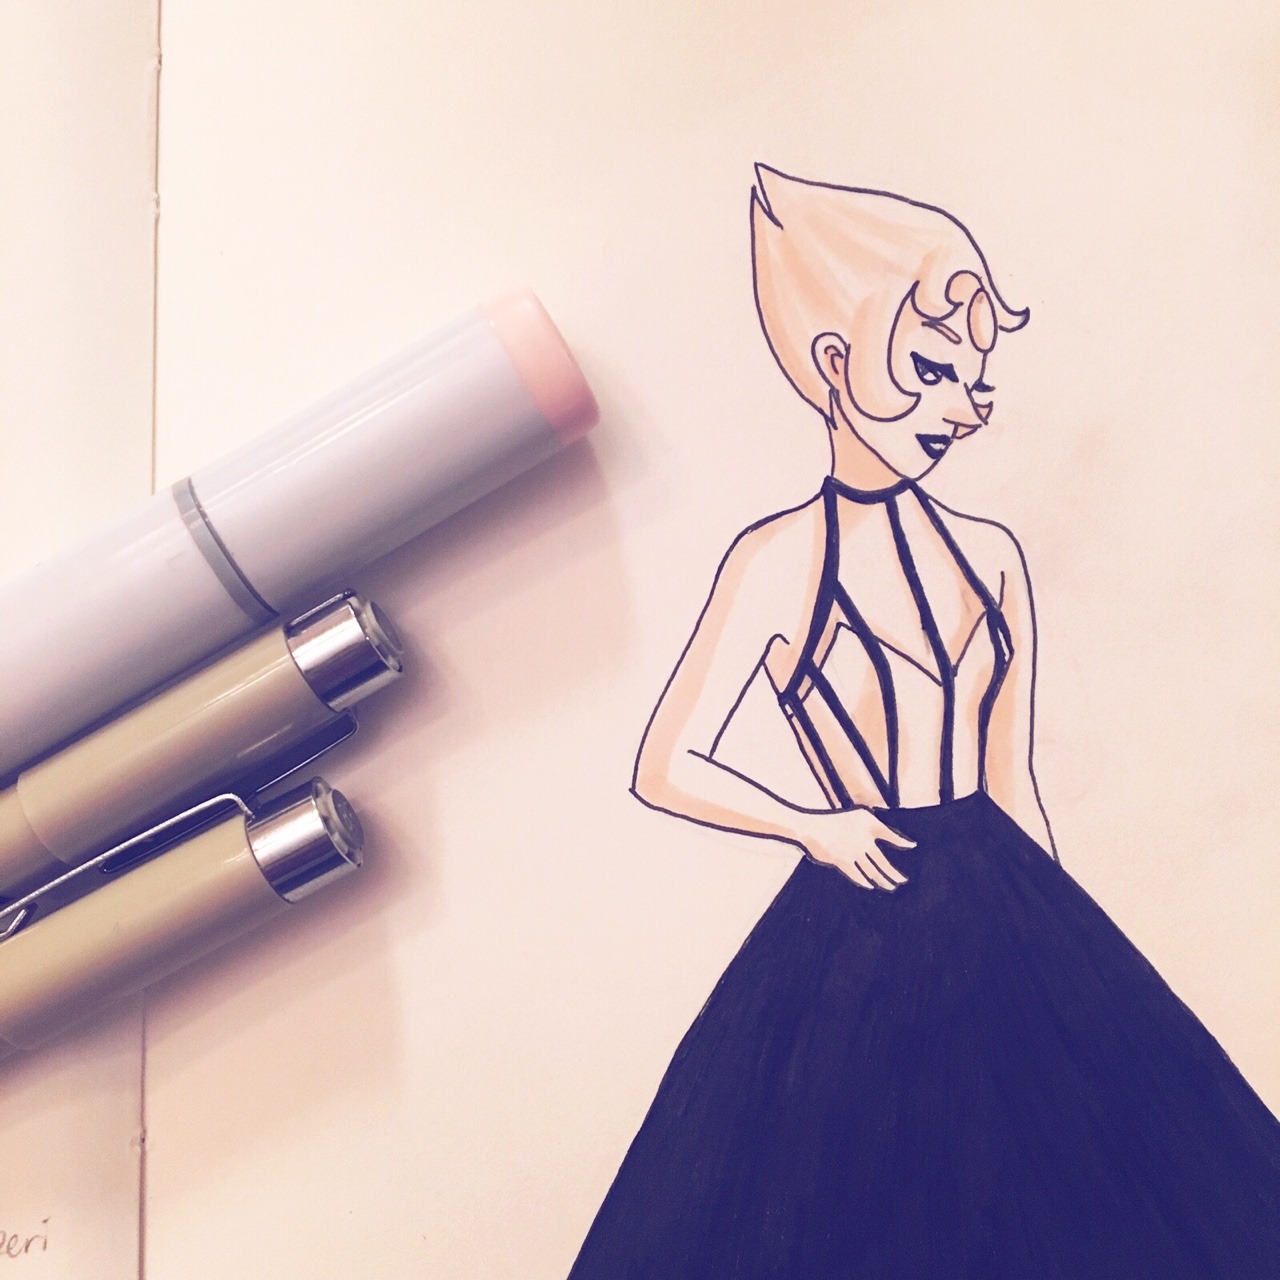 Pearl with fancy dress. 😉